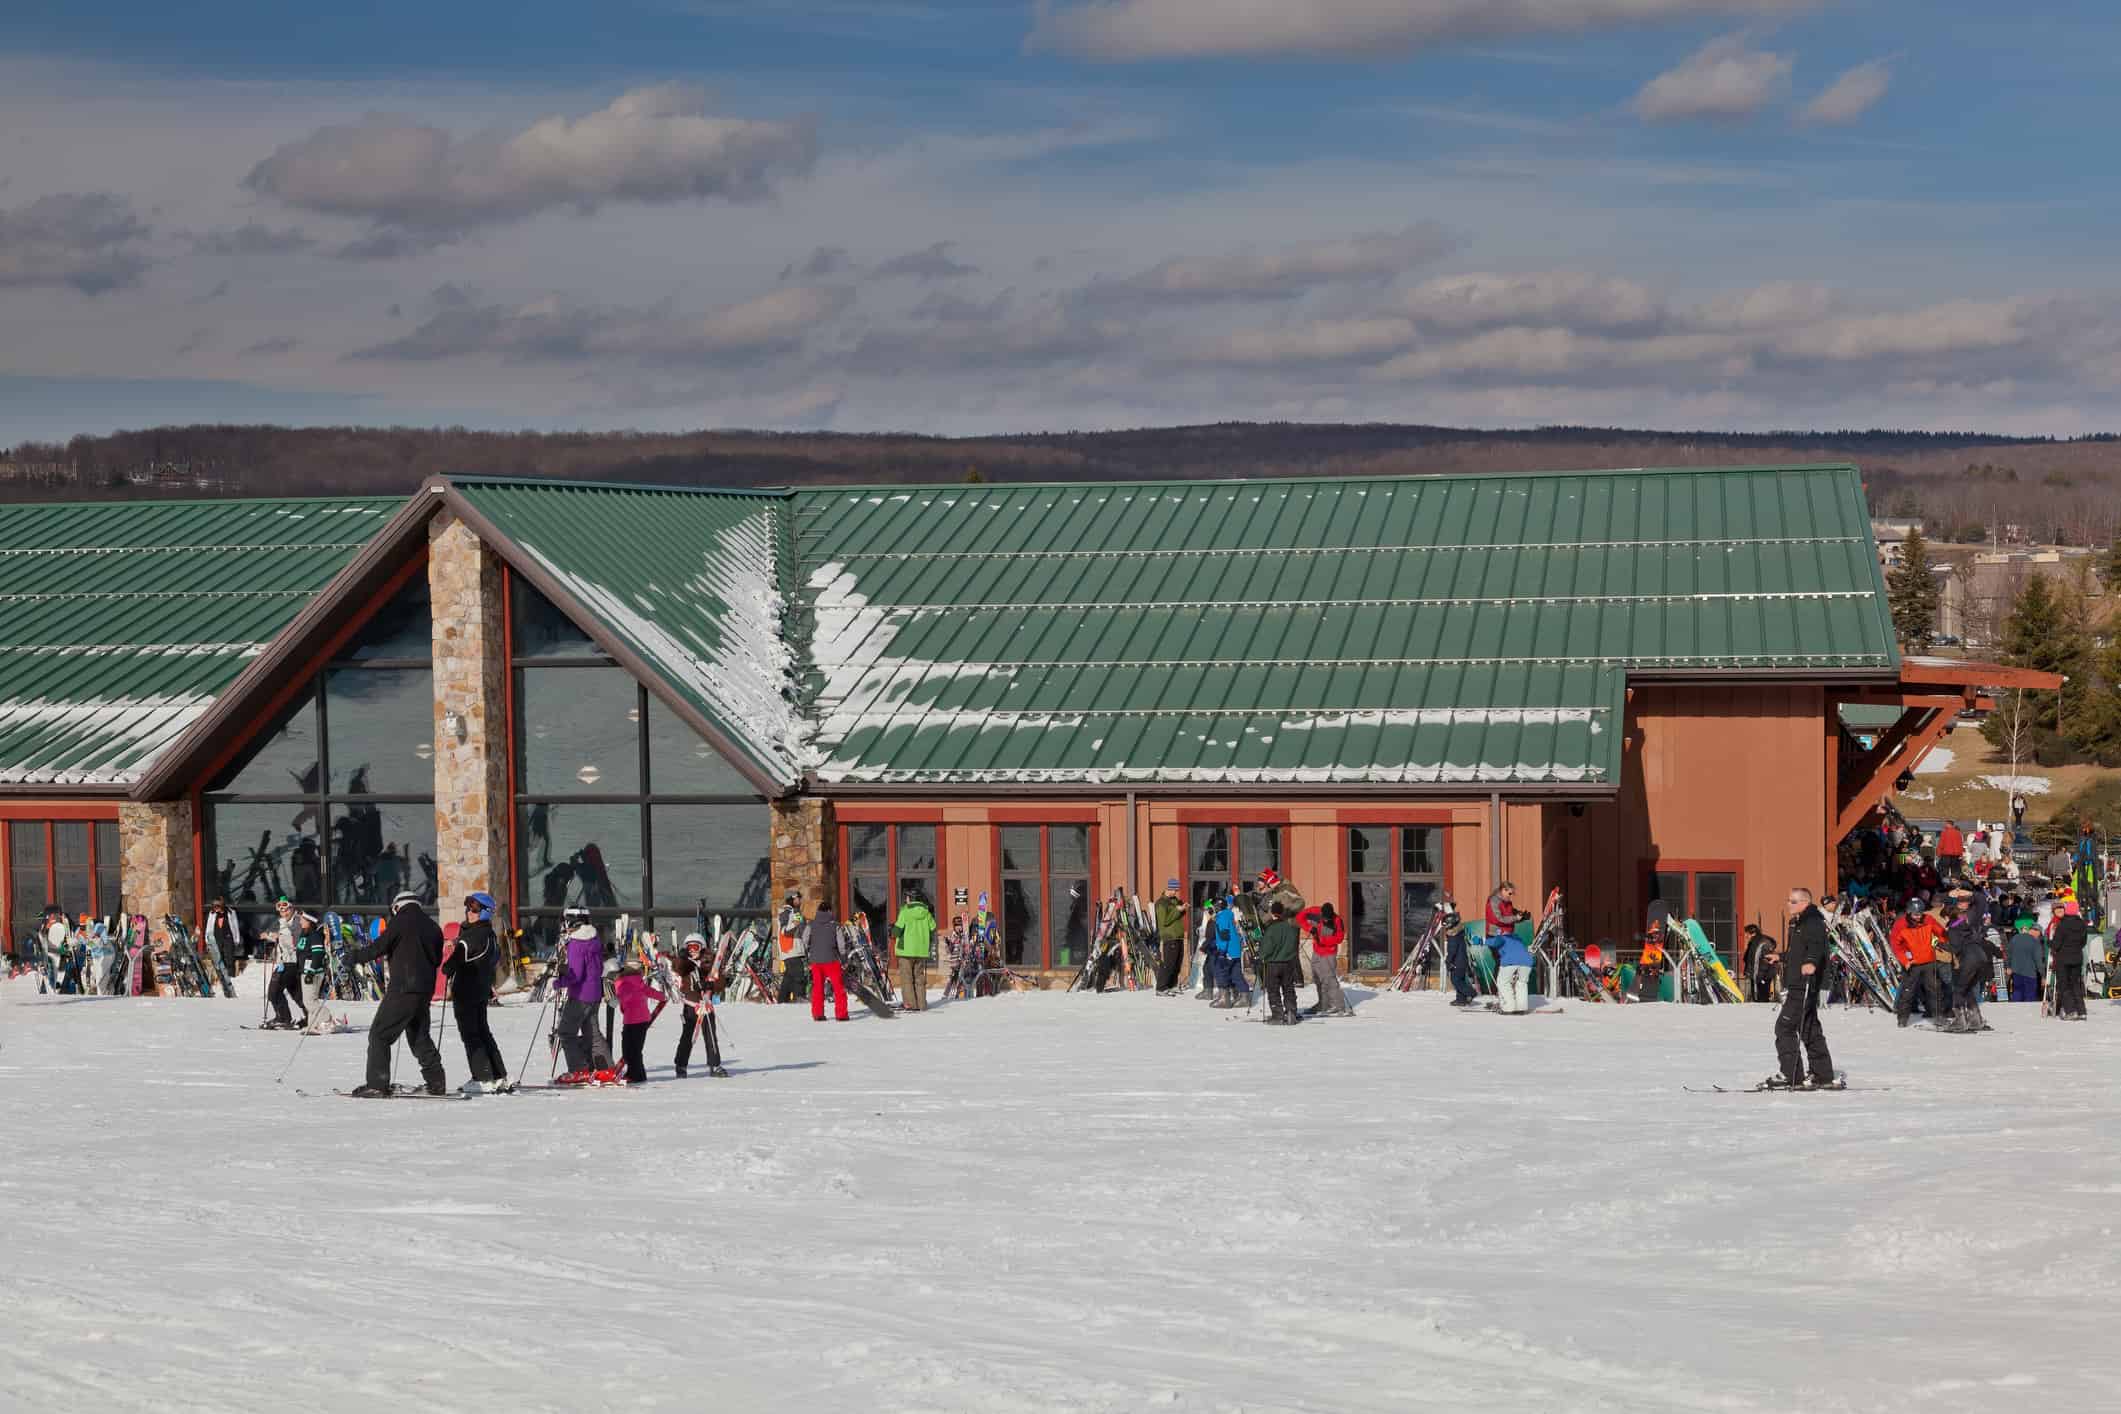 Wisp Ski Lodge in McHenry, MD